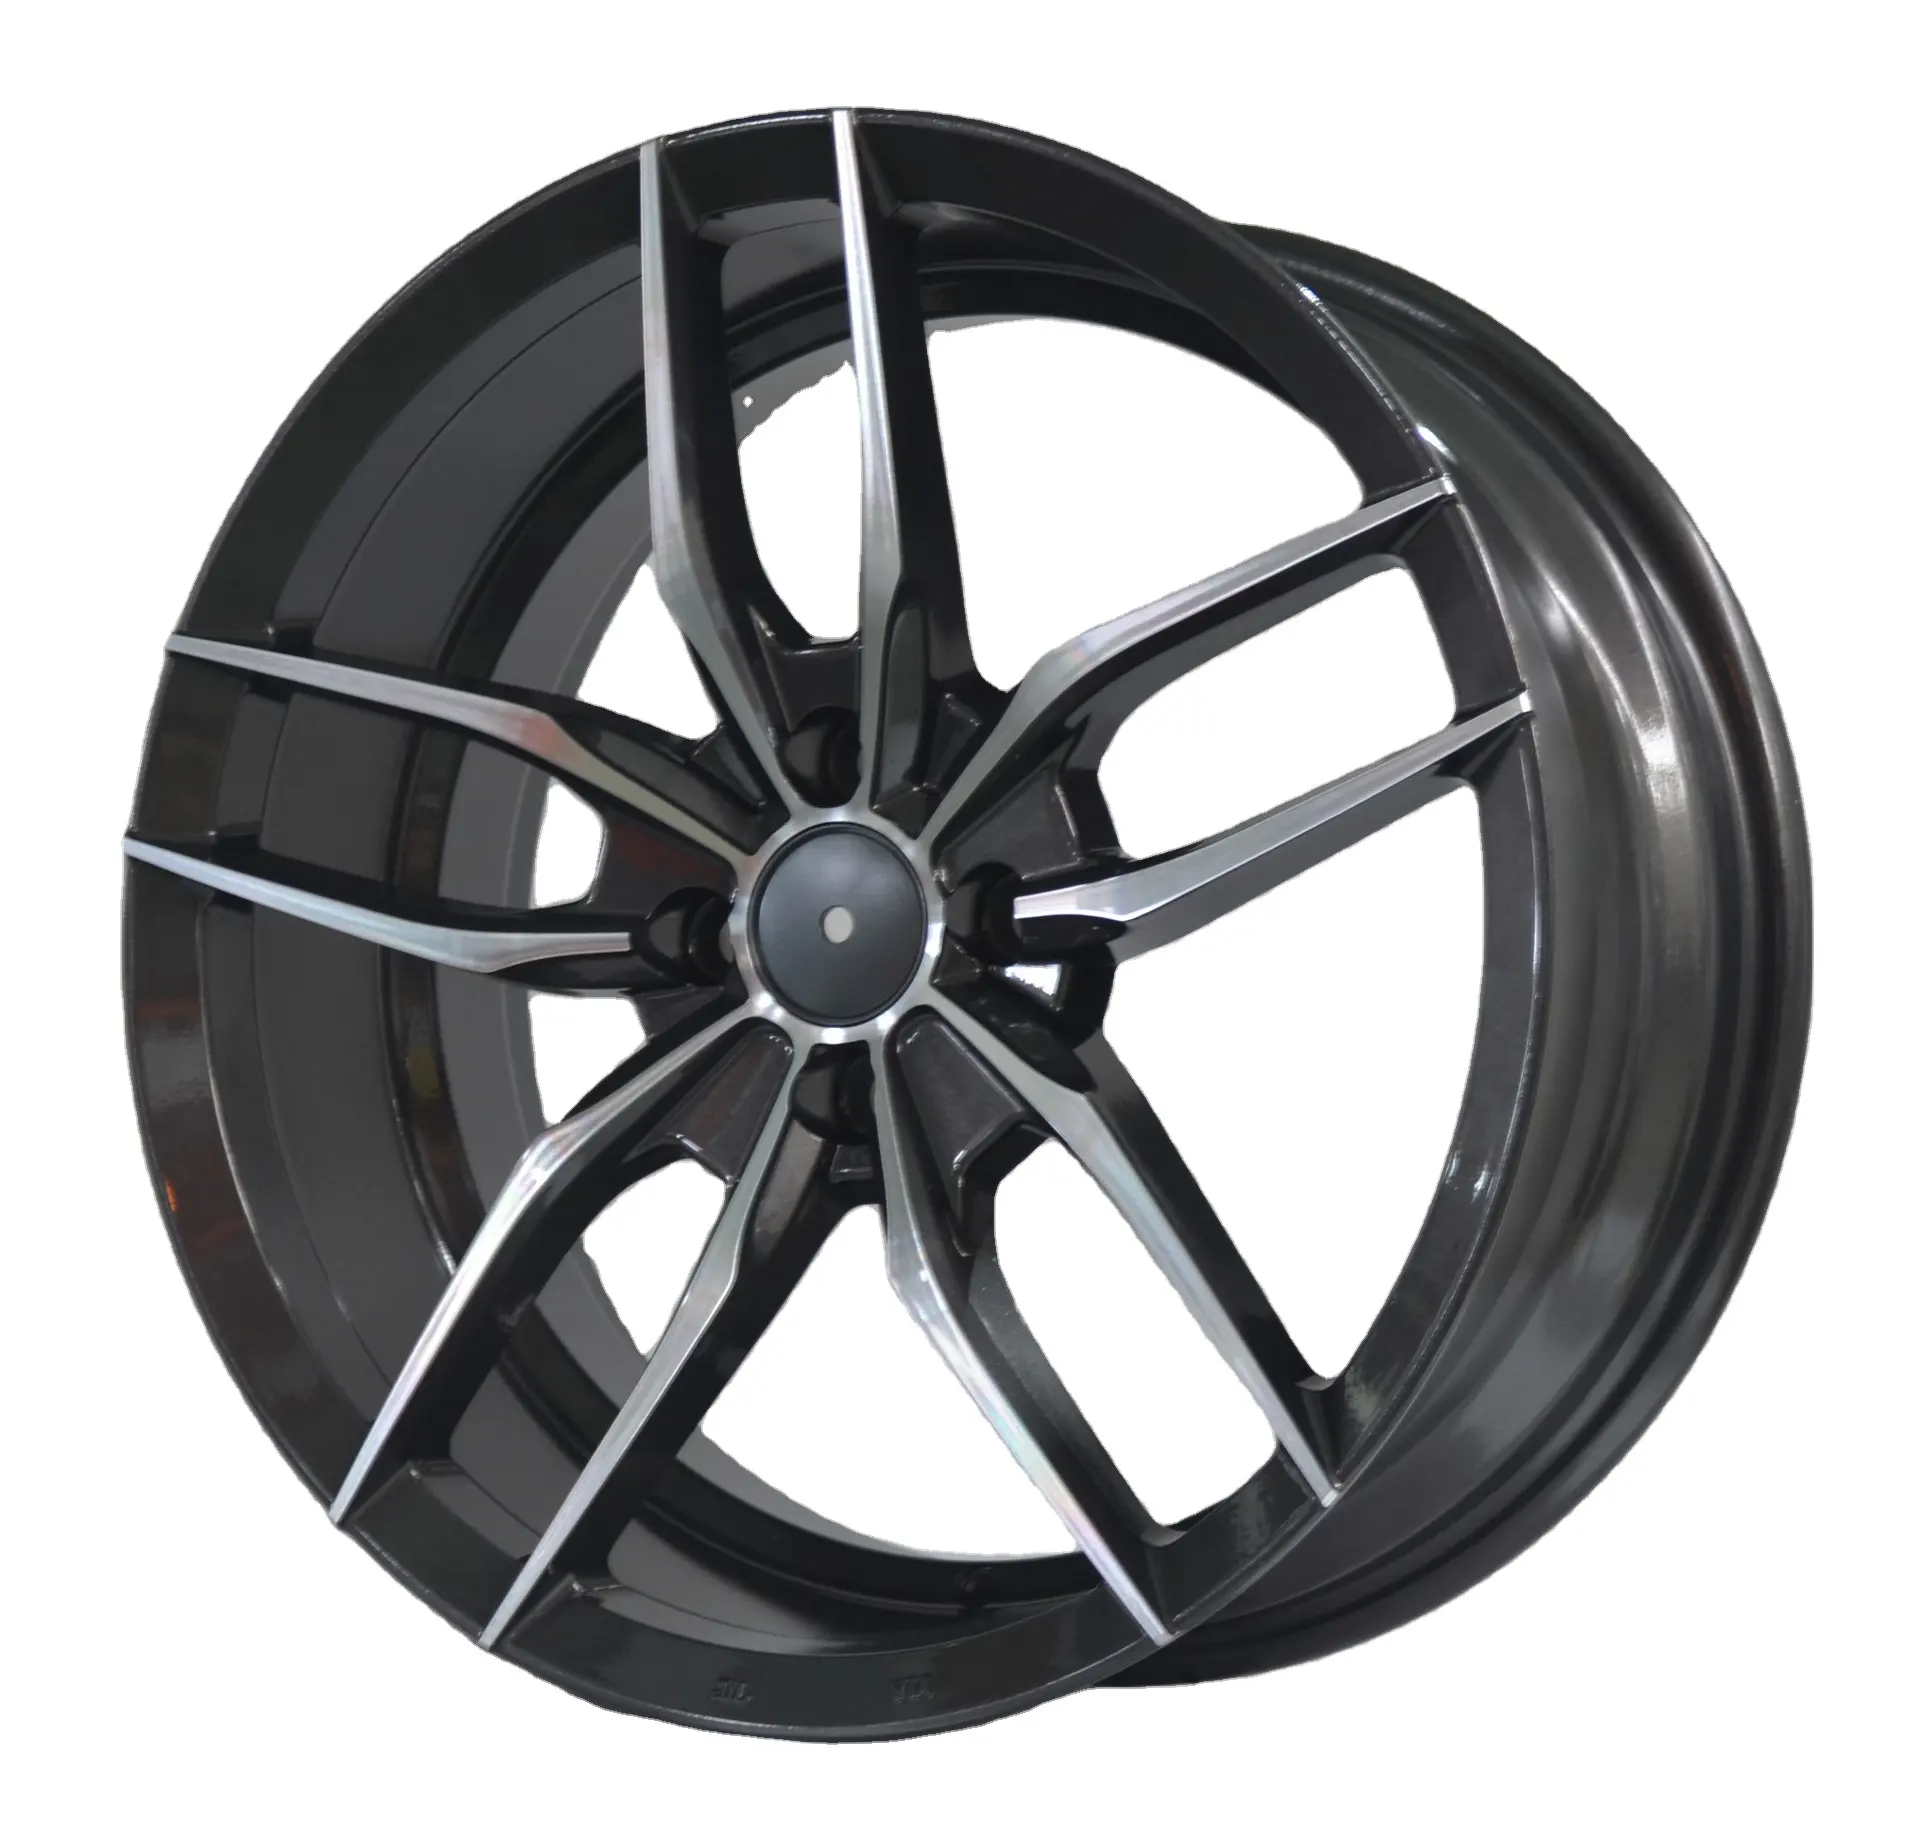 17-inch car wheel aluminum alloy steel rim modified car commercial vehicle car rim